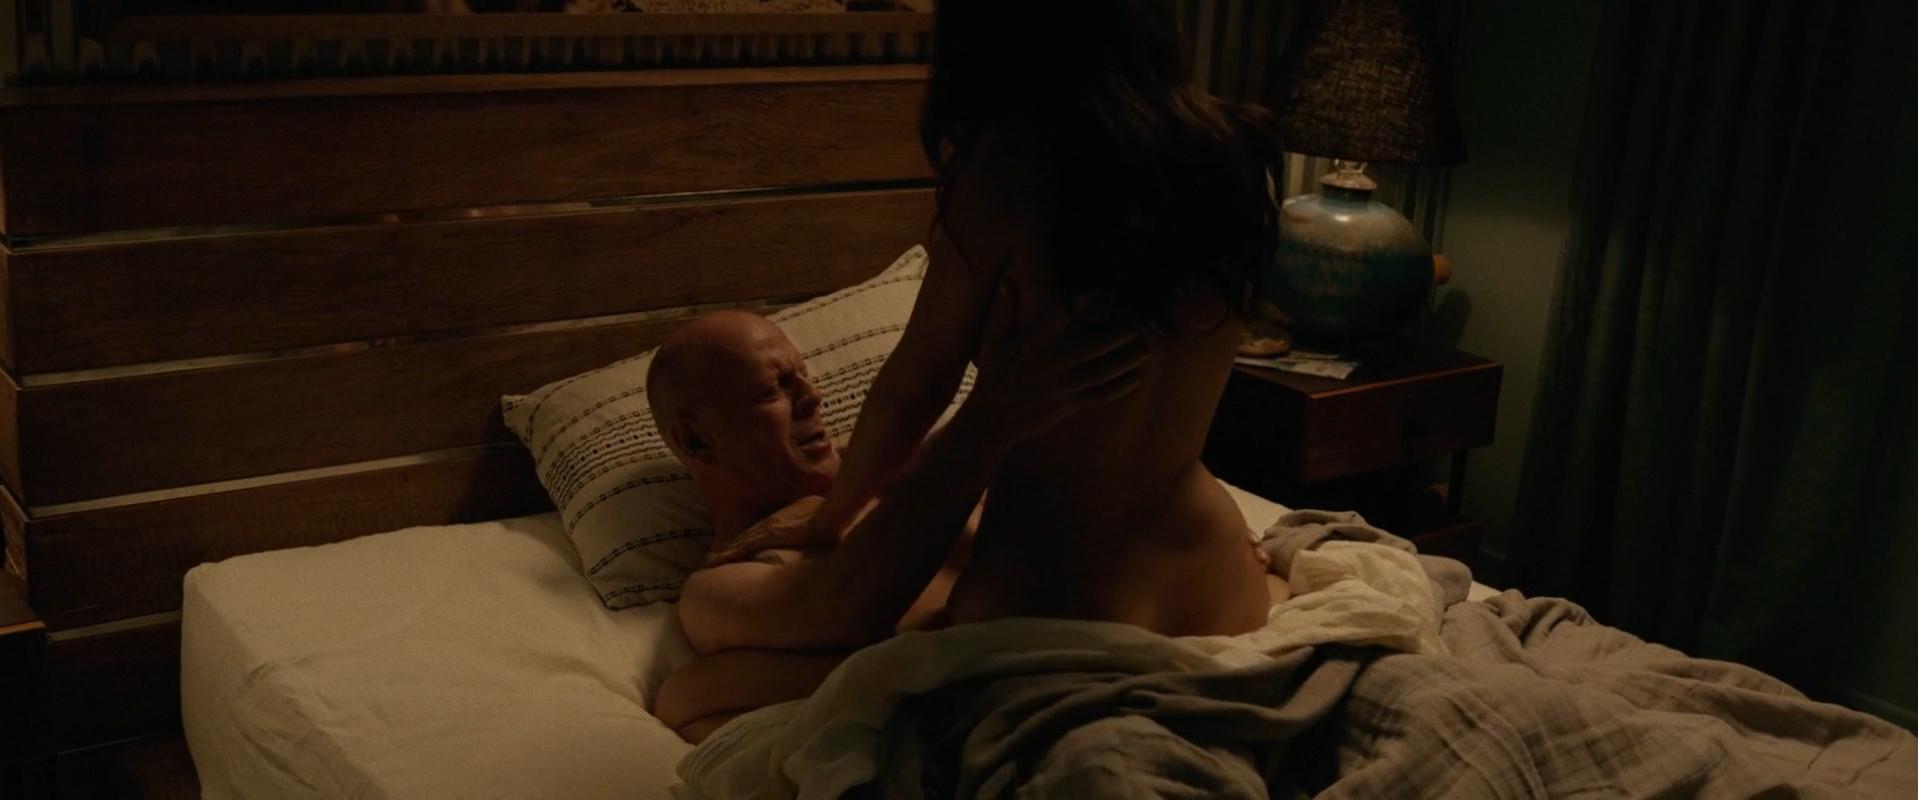 Jessica gomes naked sex scene